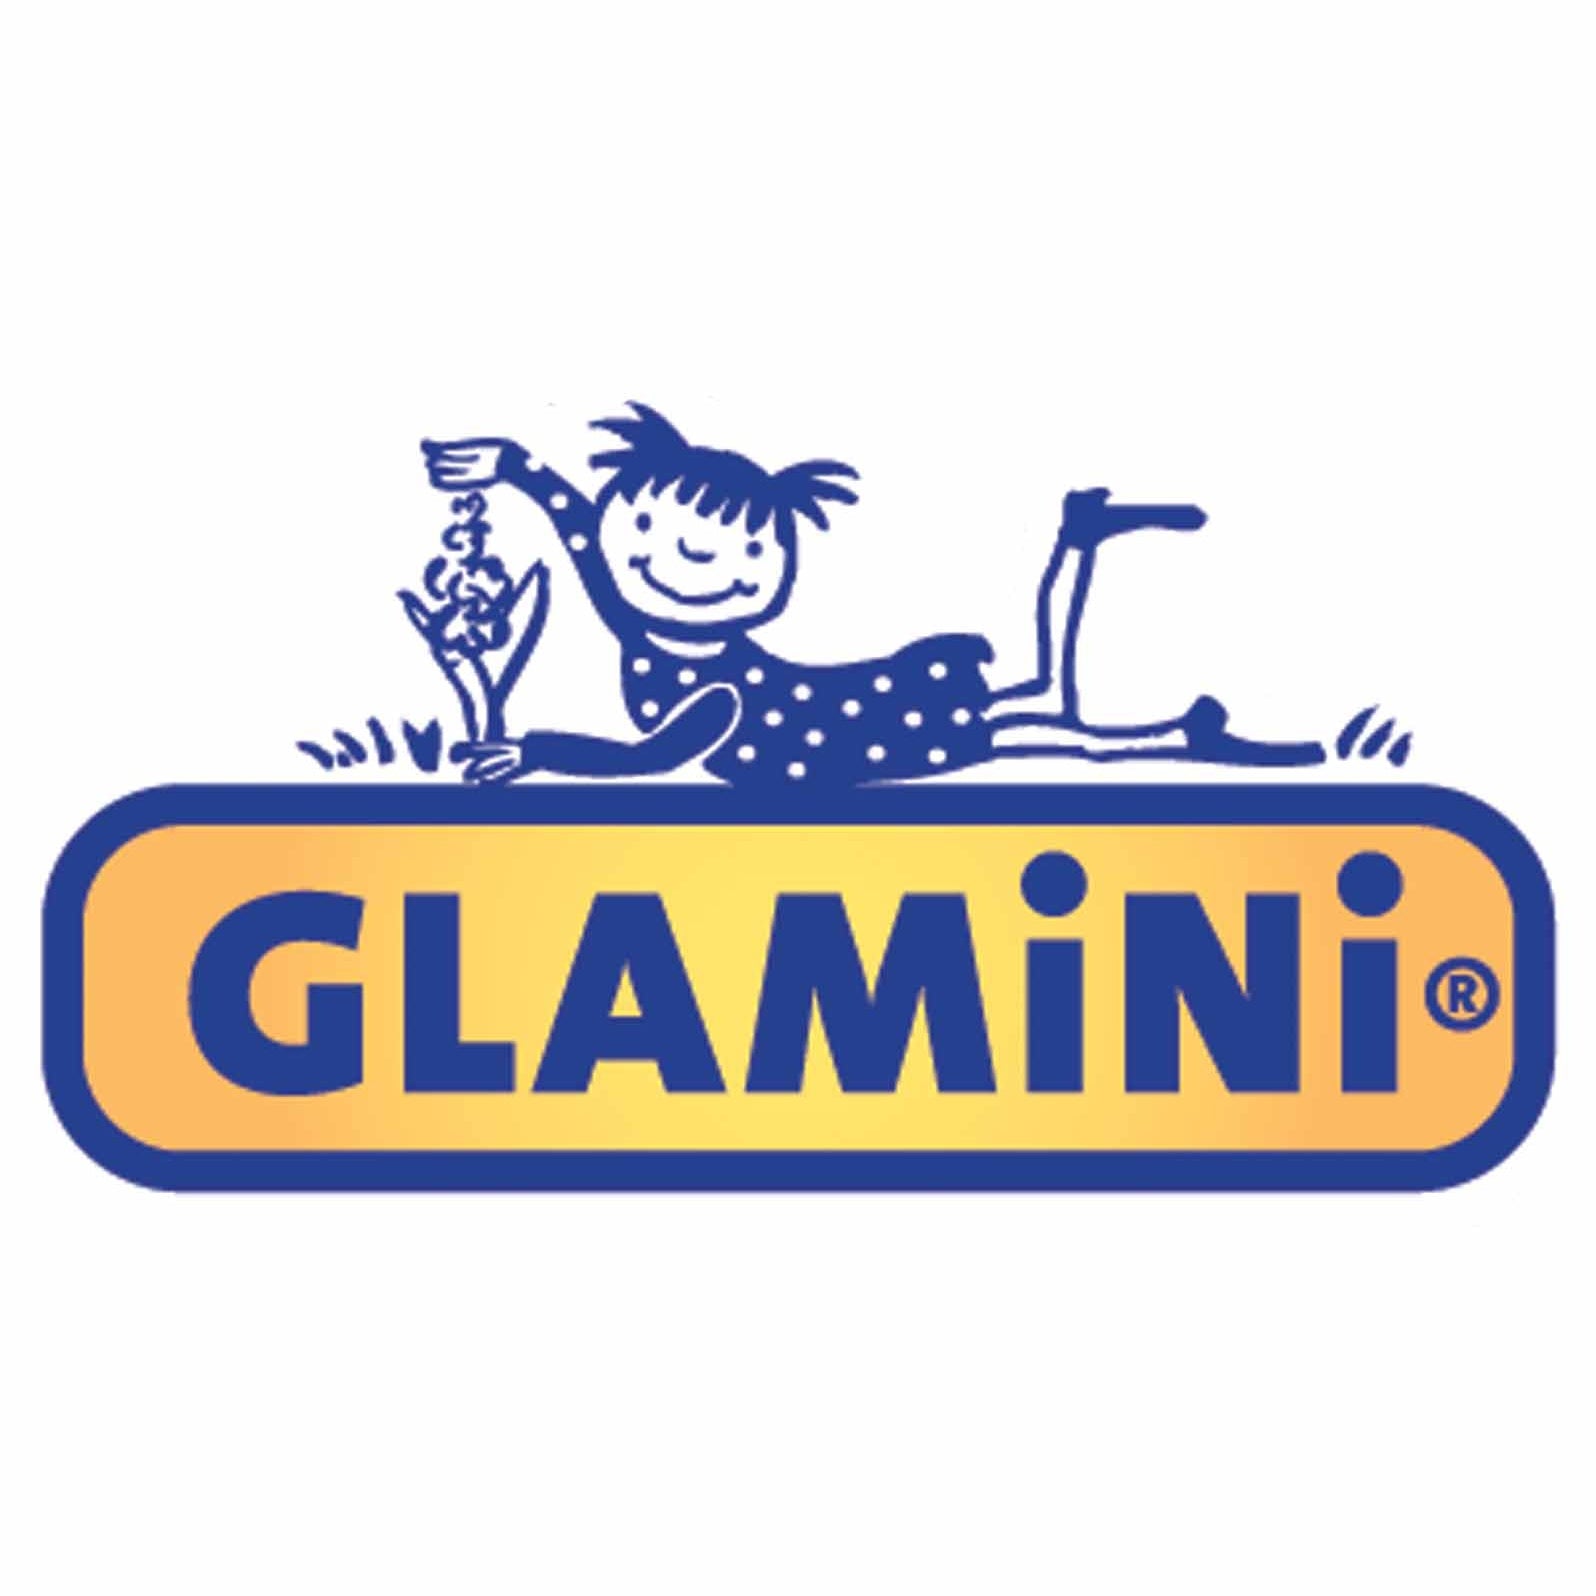 12 Glaminis en mélange - Glamini